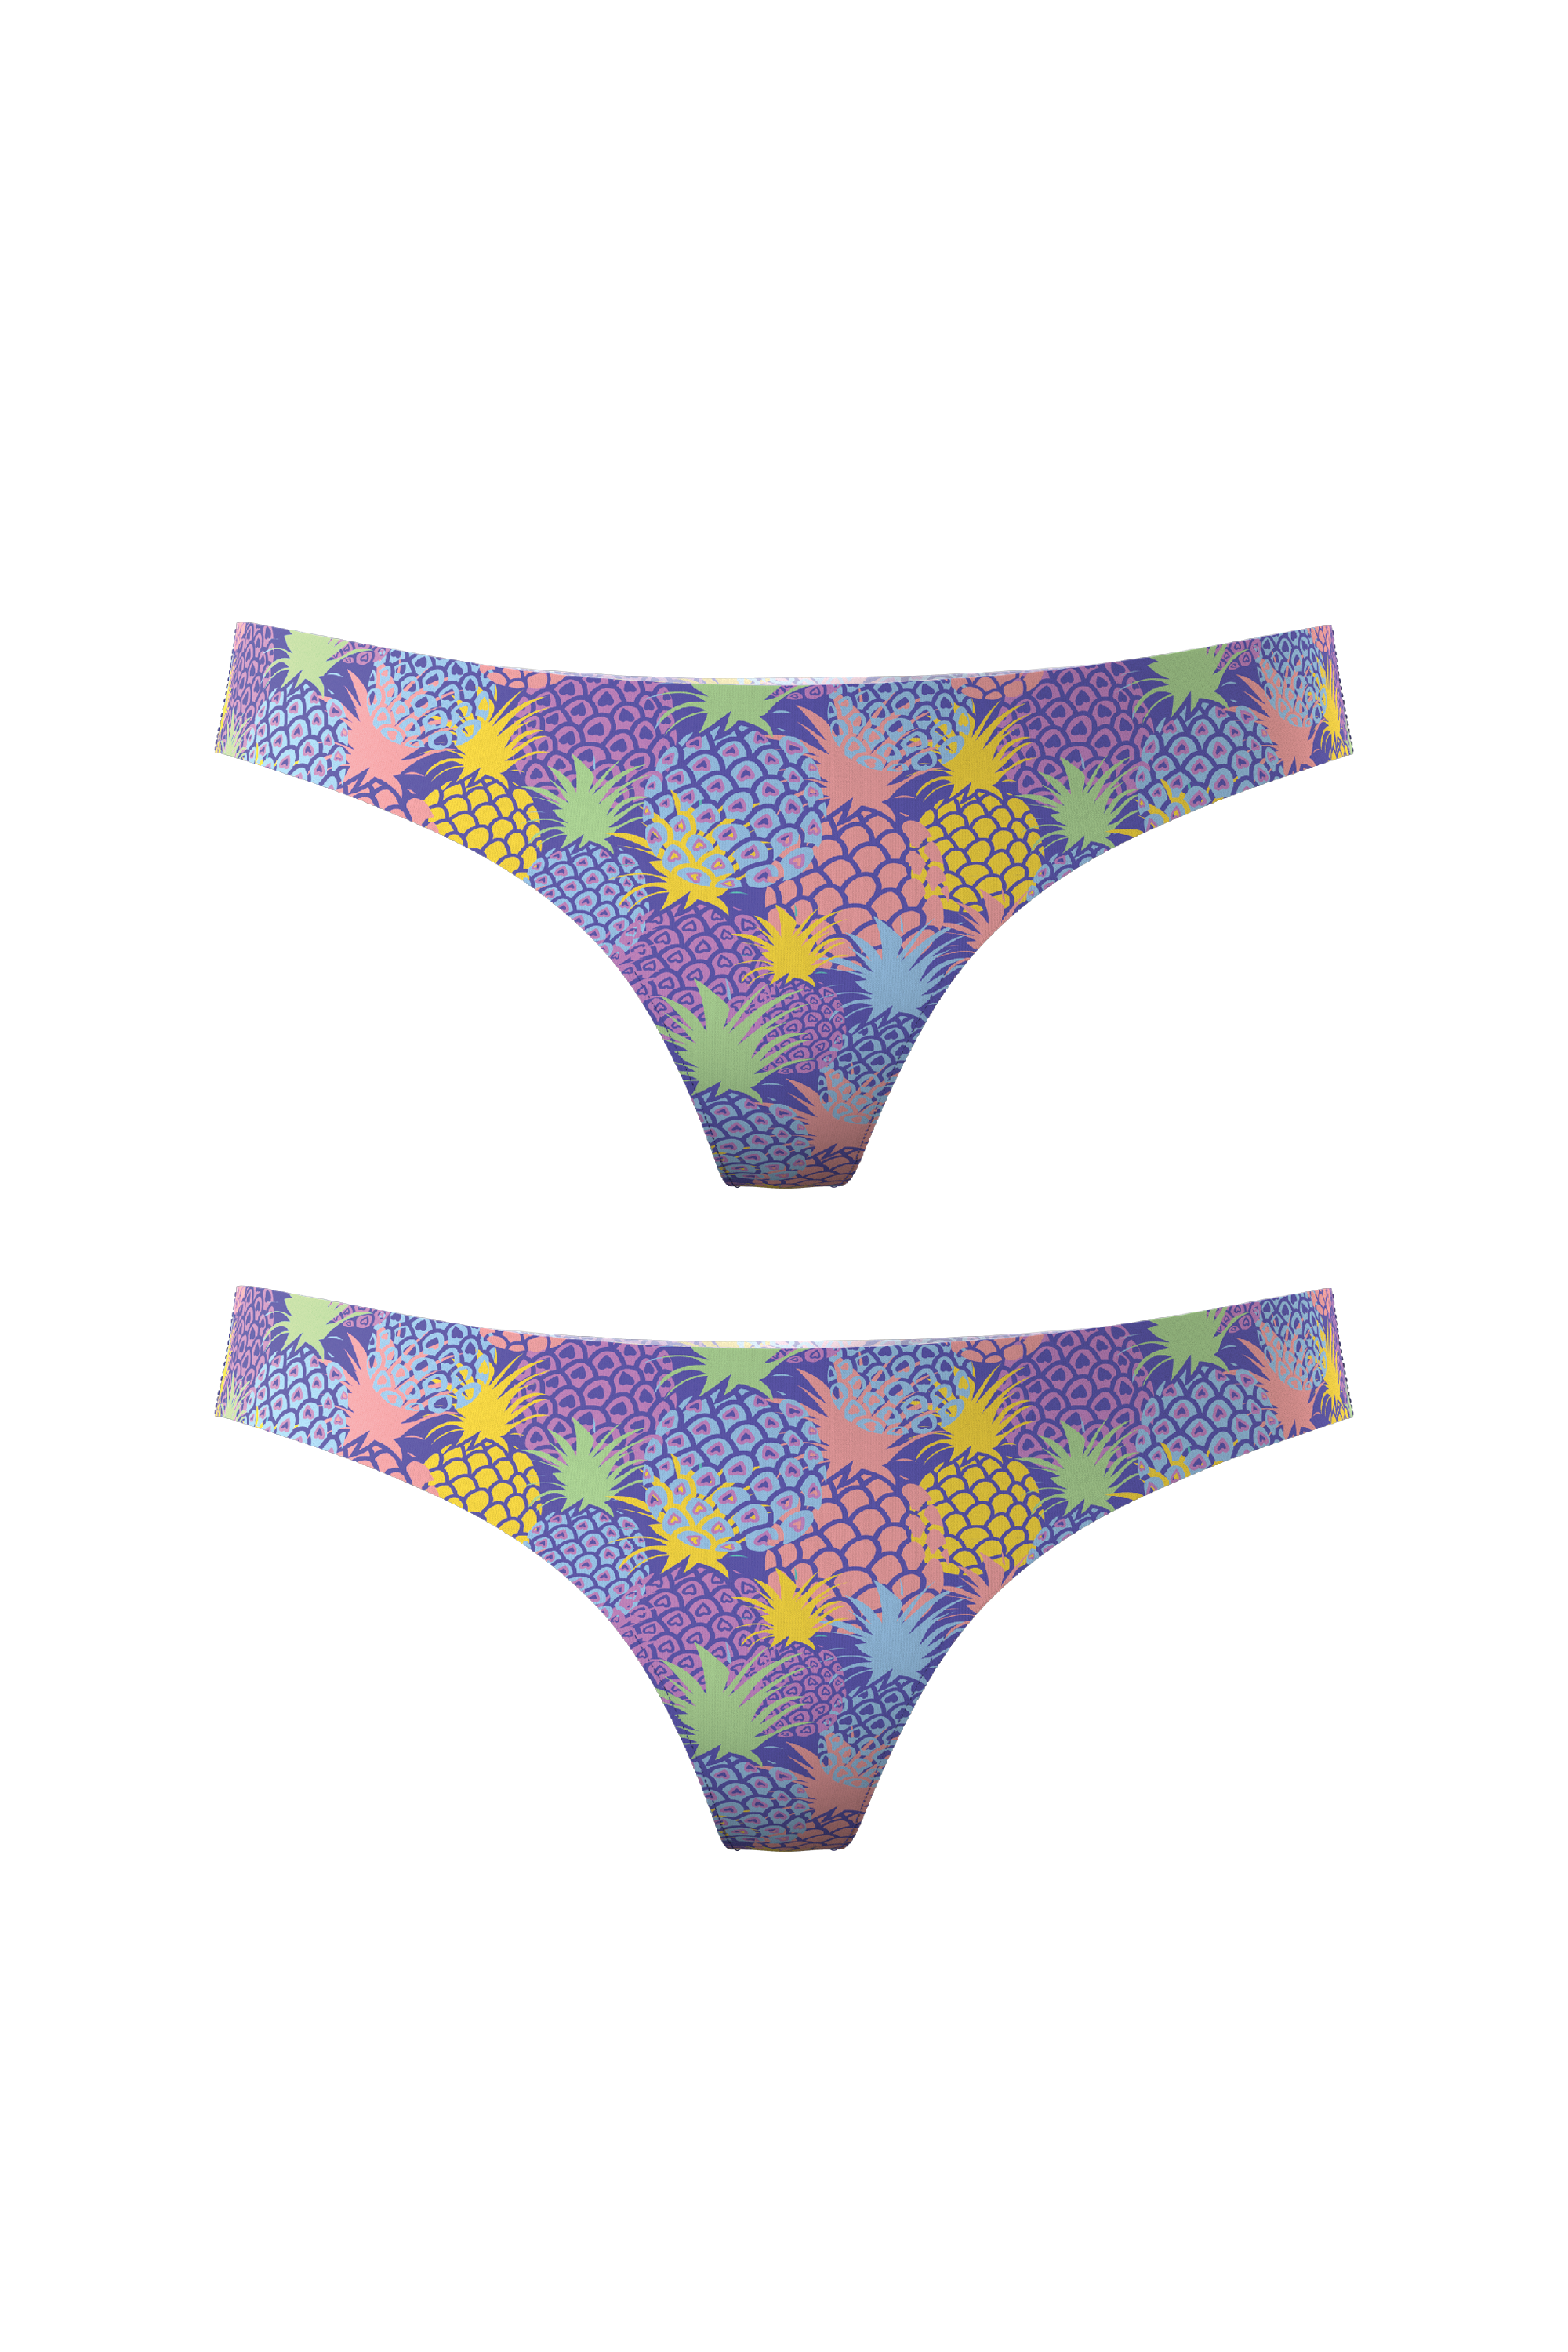 USAHTOOQ SALES Couples Matching Underwear, Set of 2 Pieces